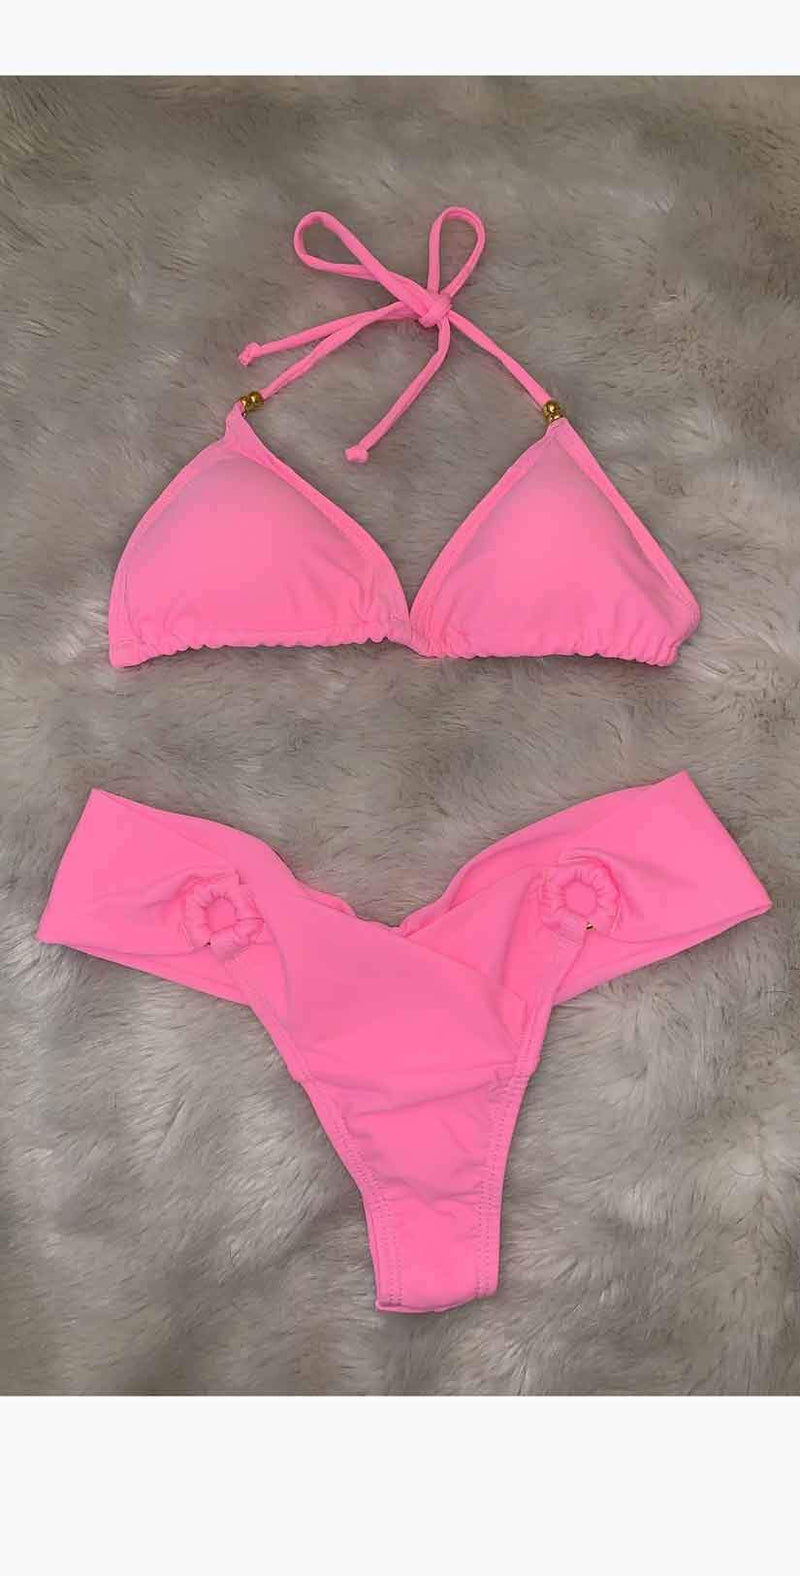 Camaroha Sutra Calypso Bikini Sets hot pink front